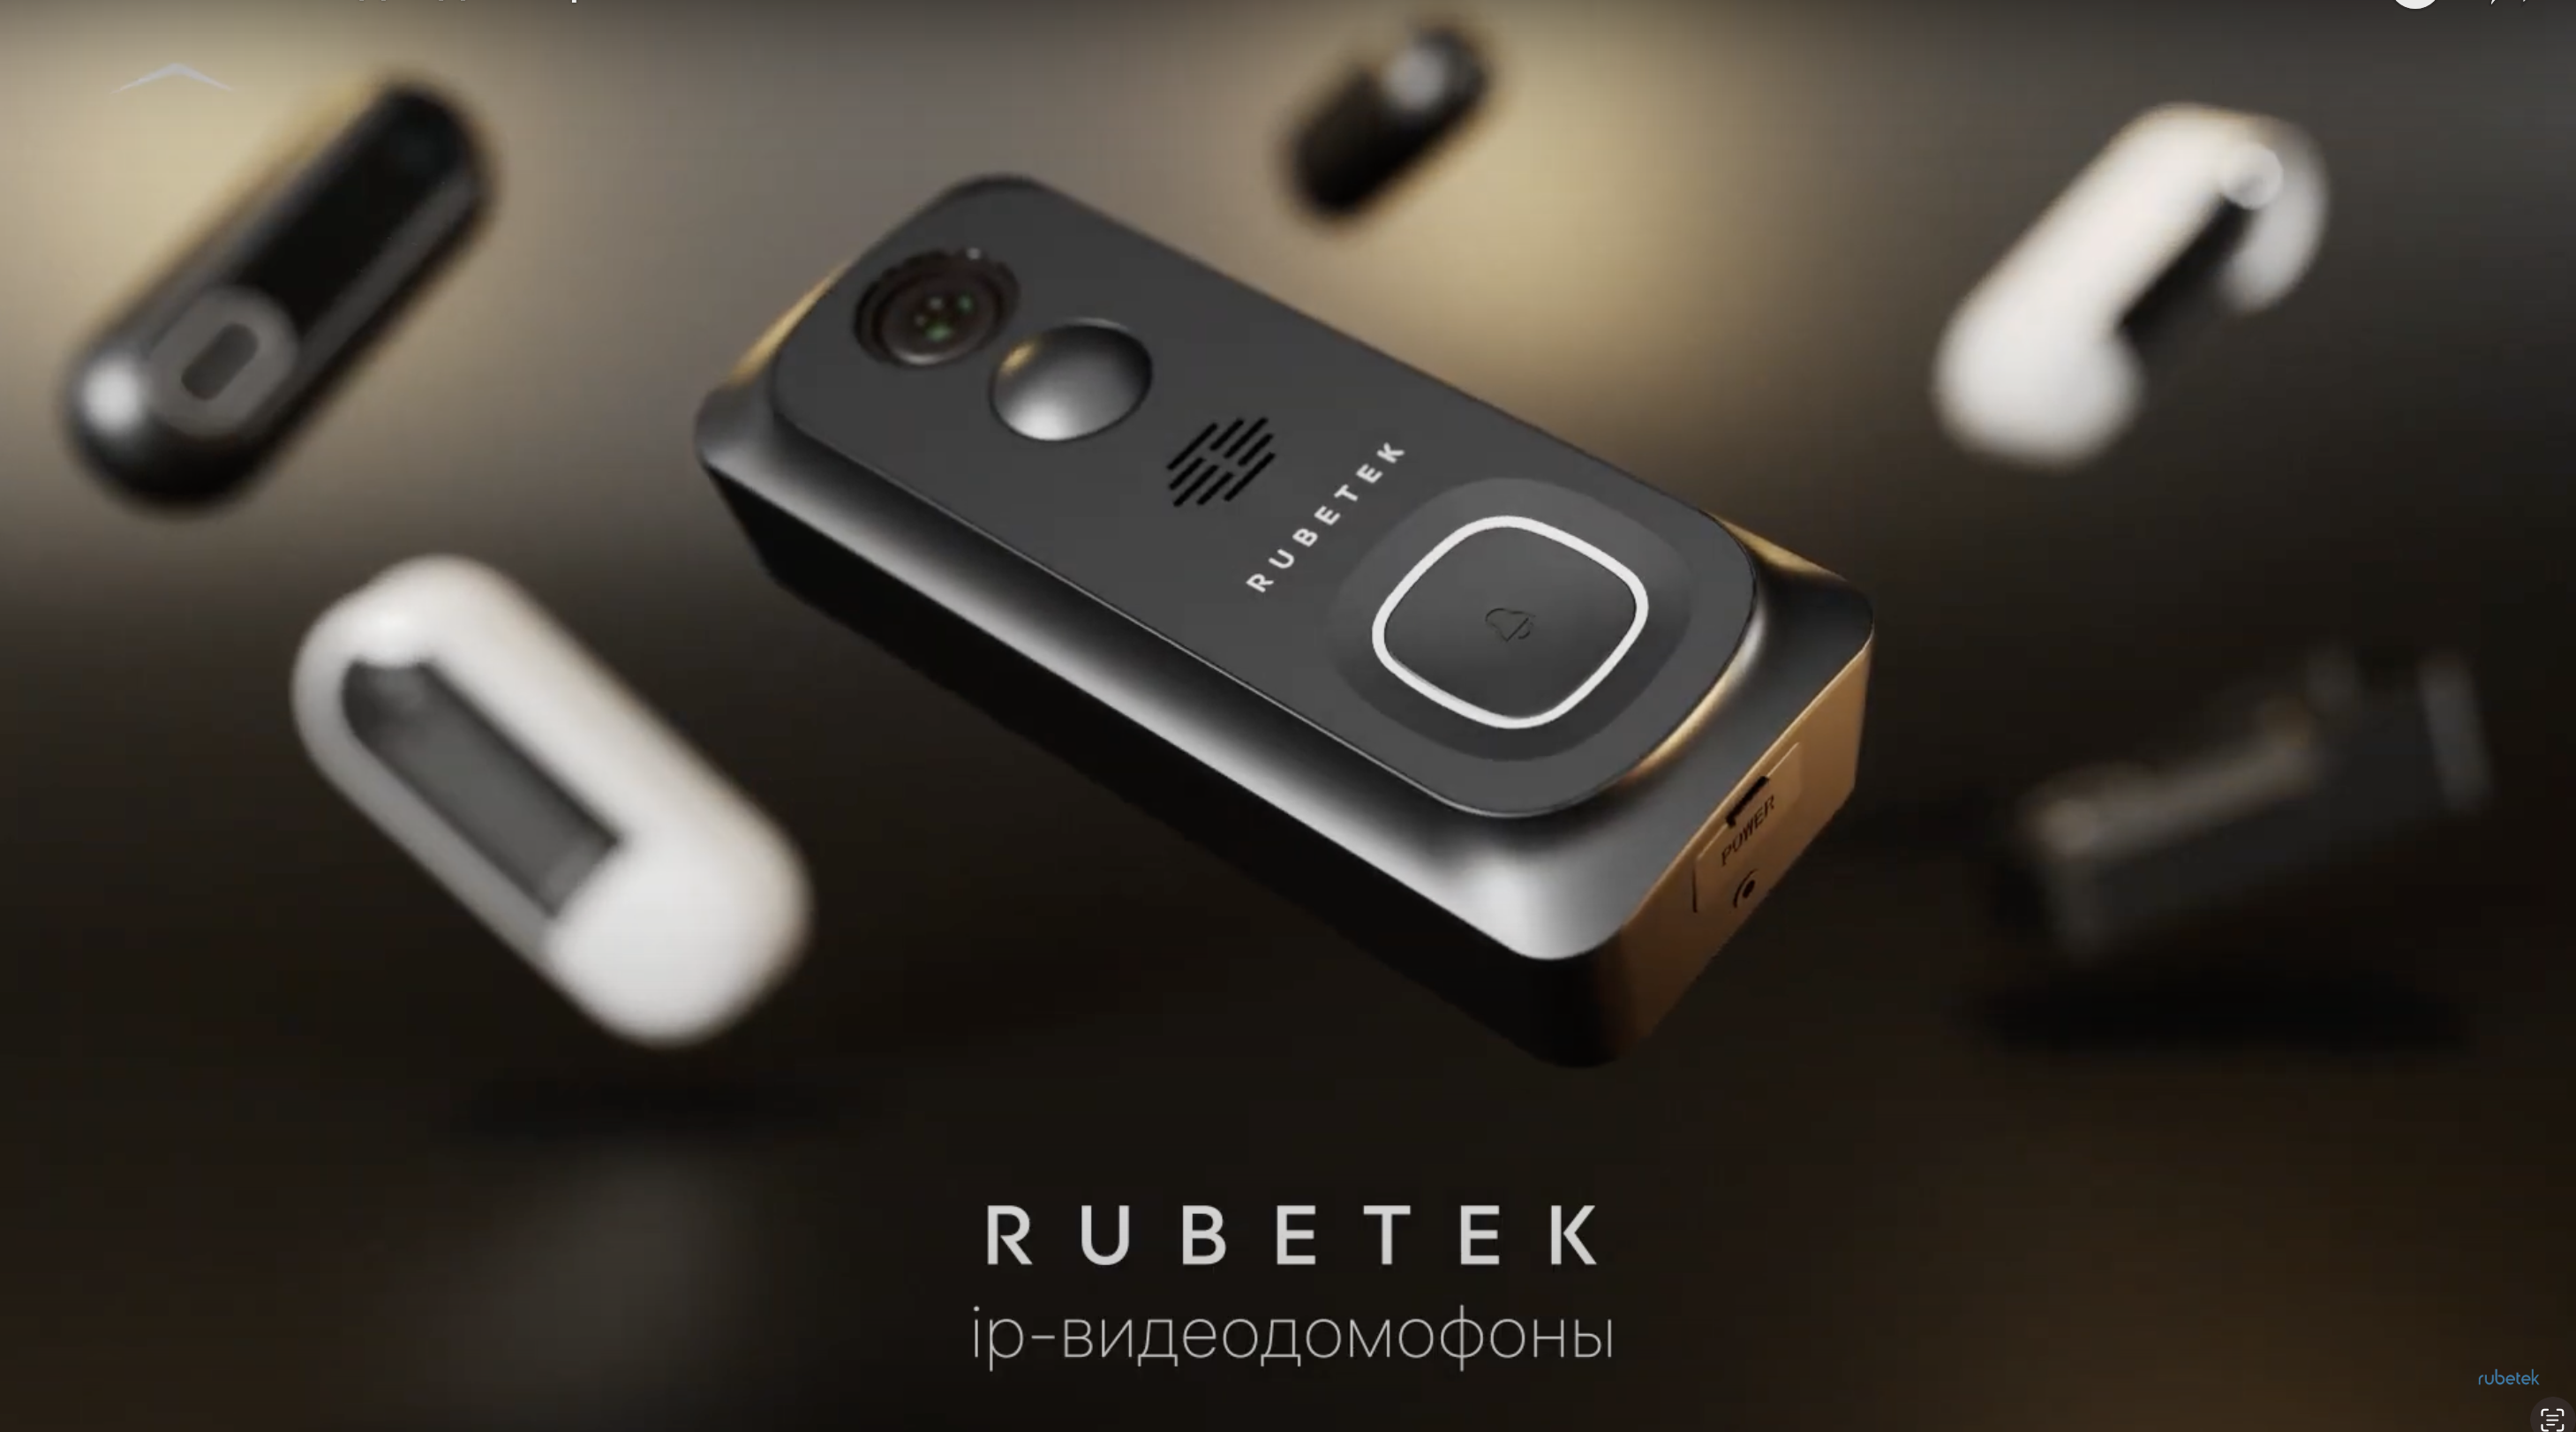 IP-Видеодомофон Rubetek RV-3440